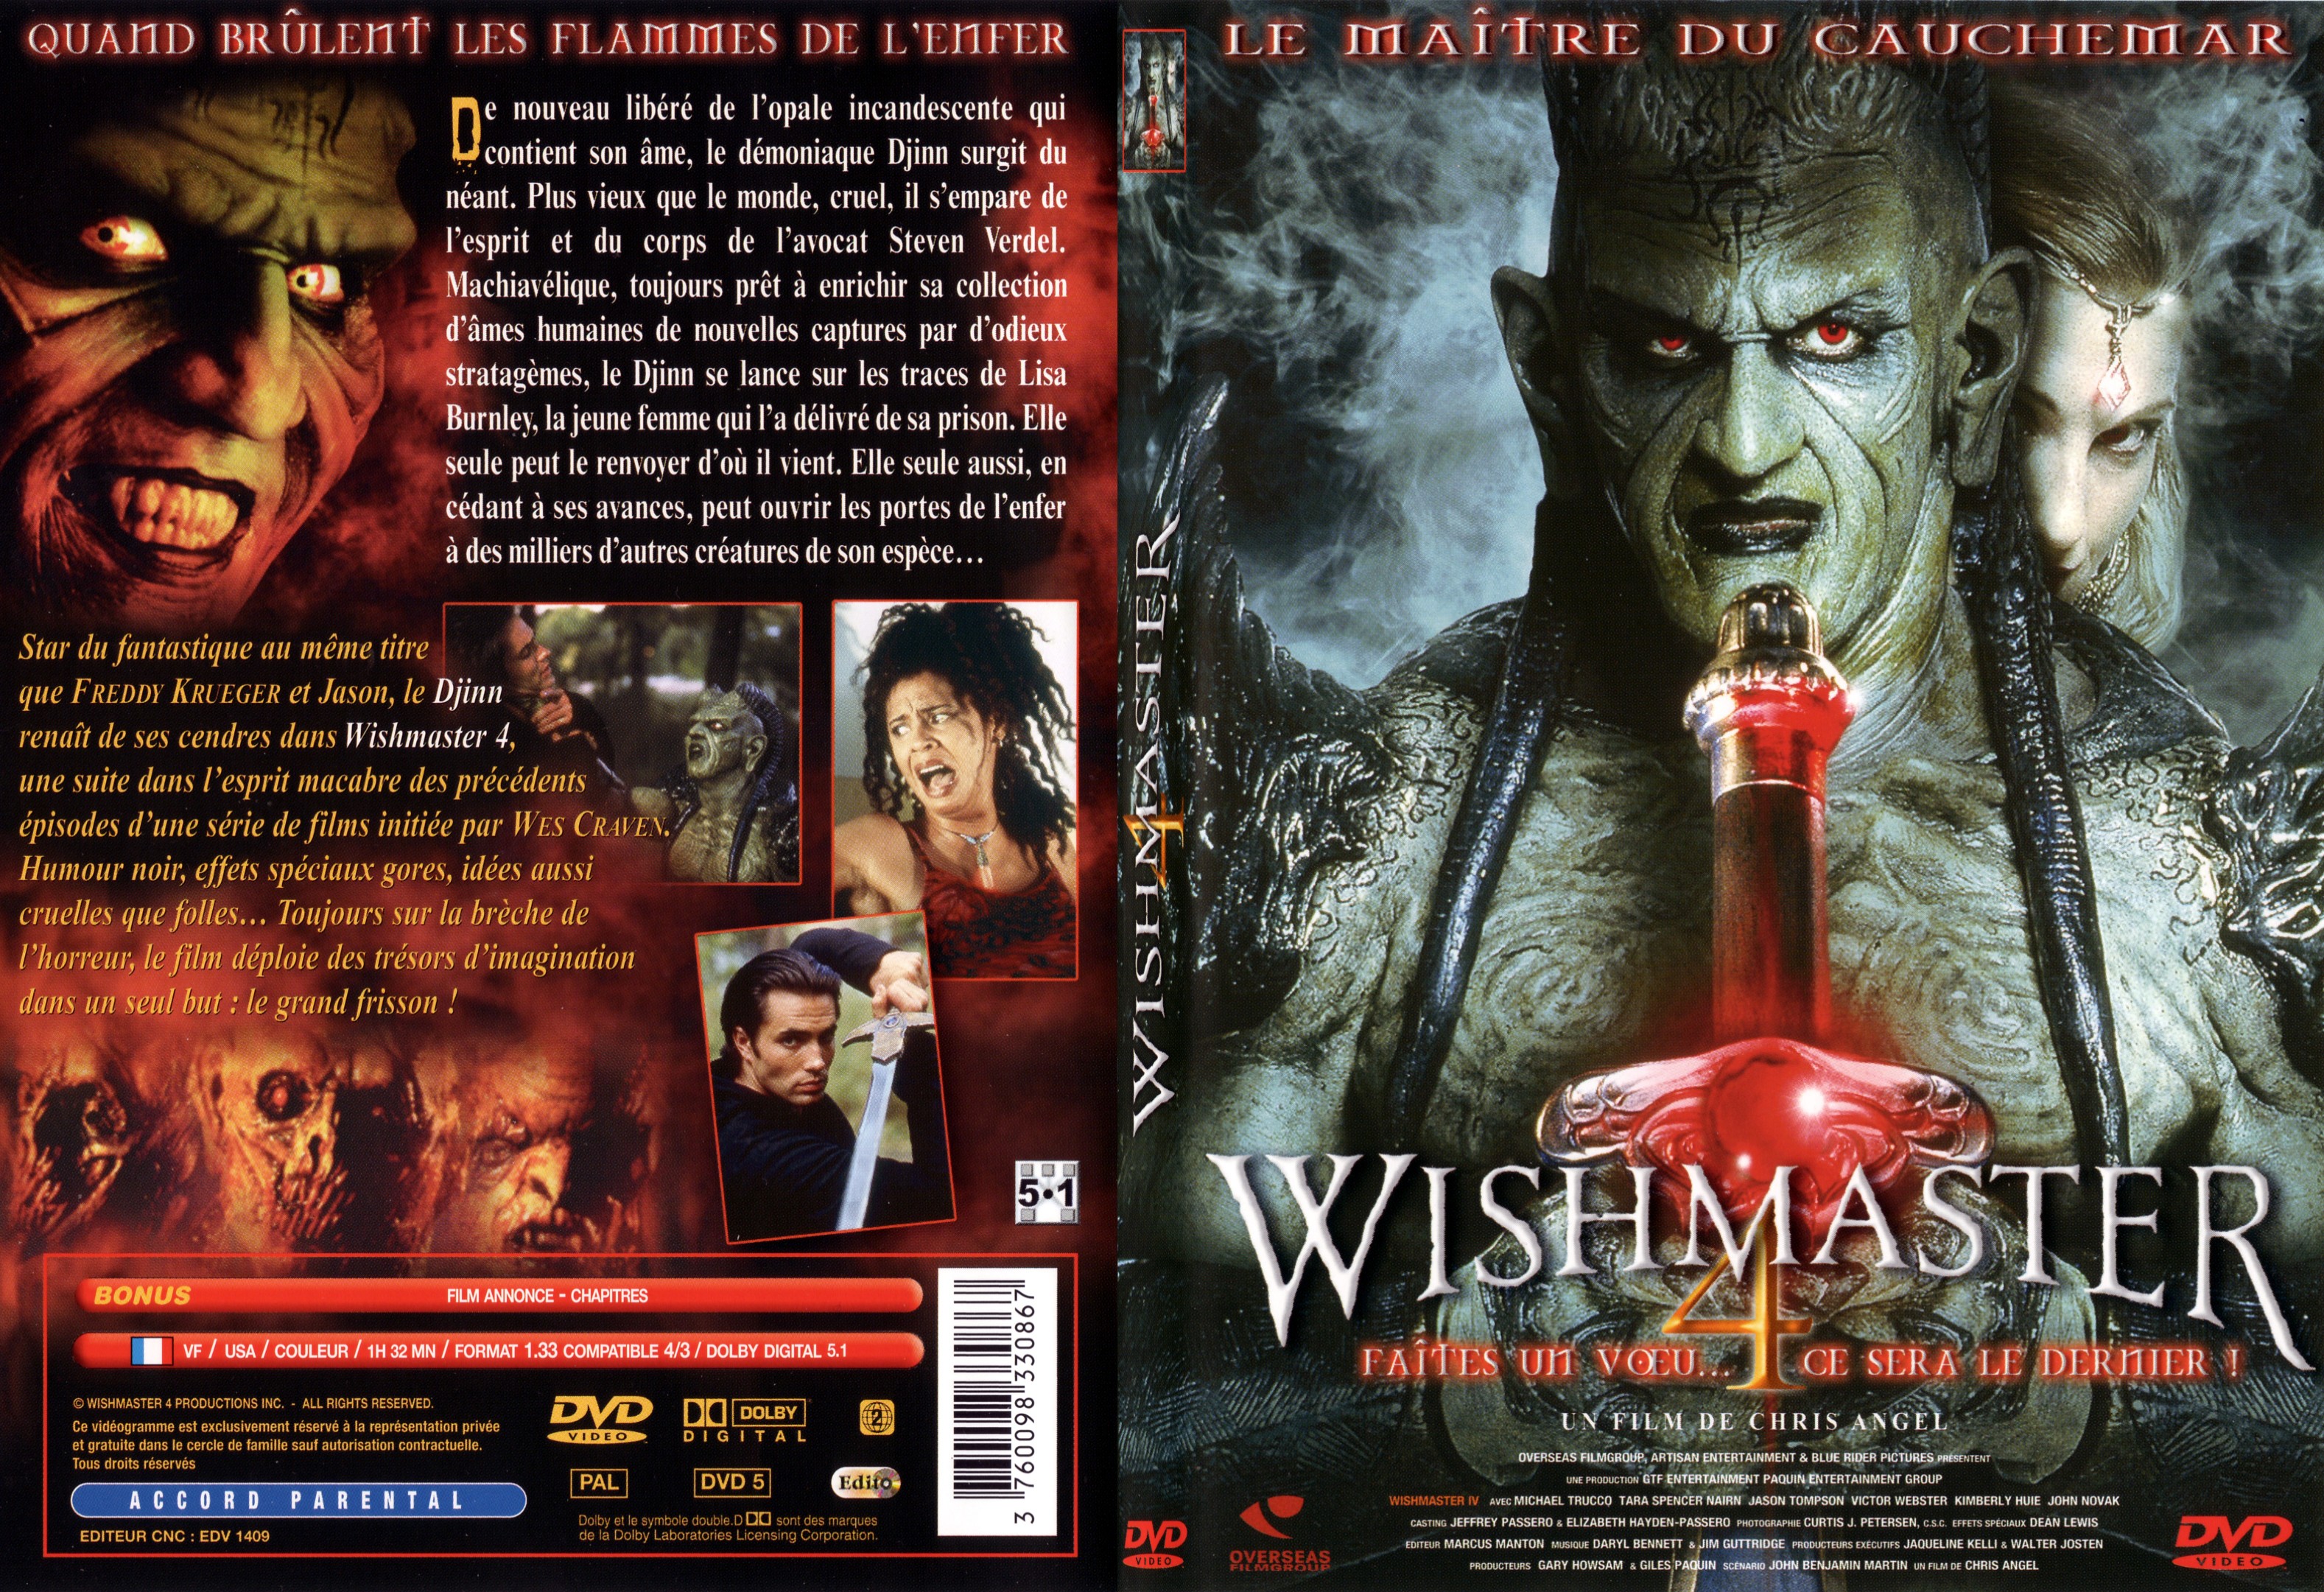 Jaquette DVD Wishmaster 4 - SLIM